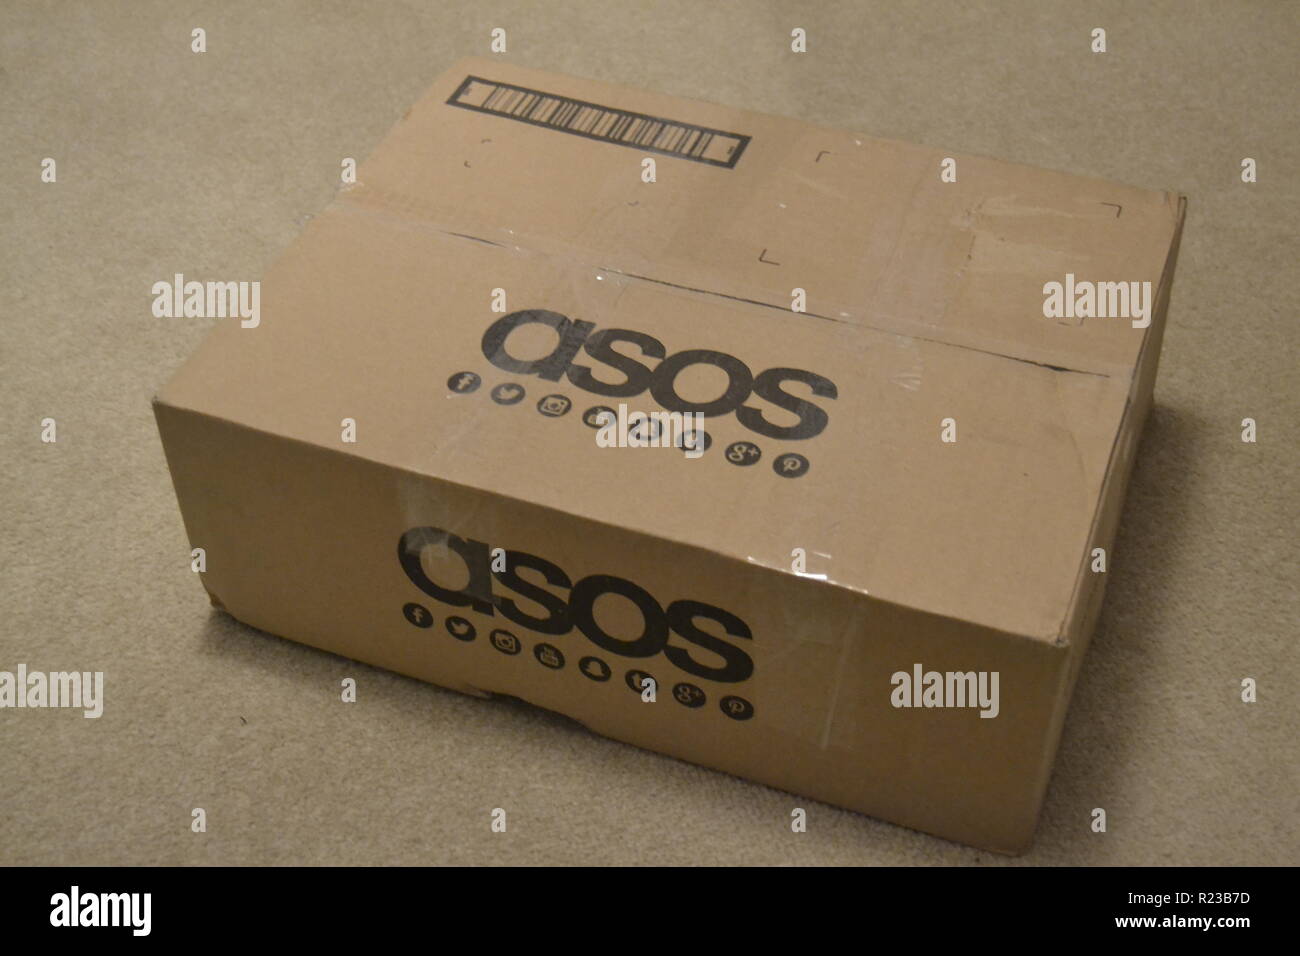 Asos paket -Fotos und -Bildmaterial in hoher Auflösung – Alamy